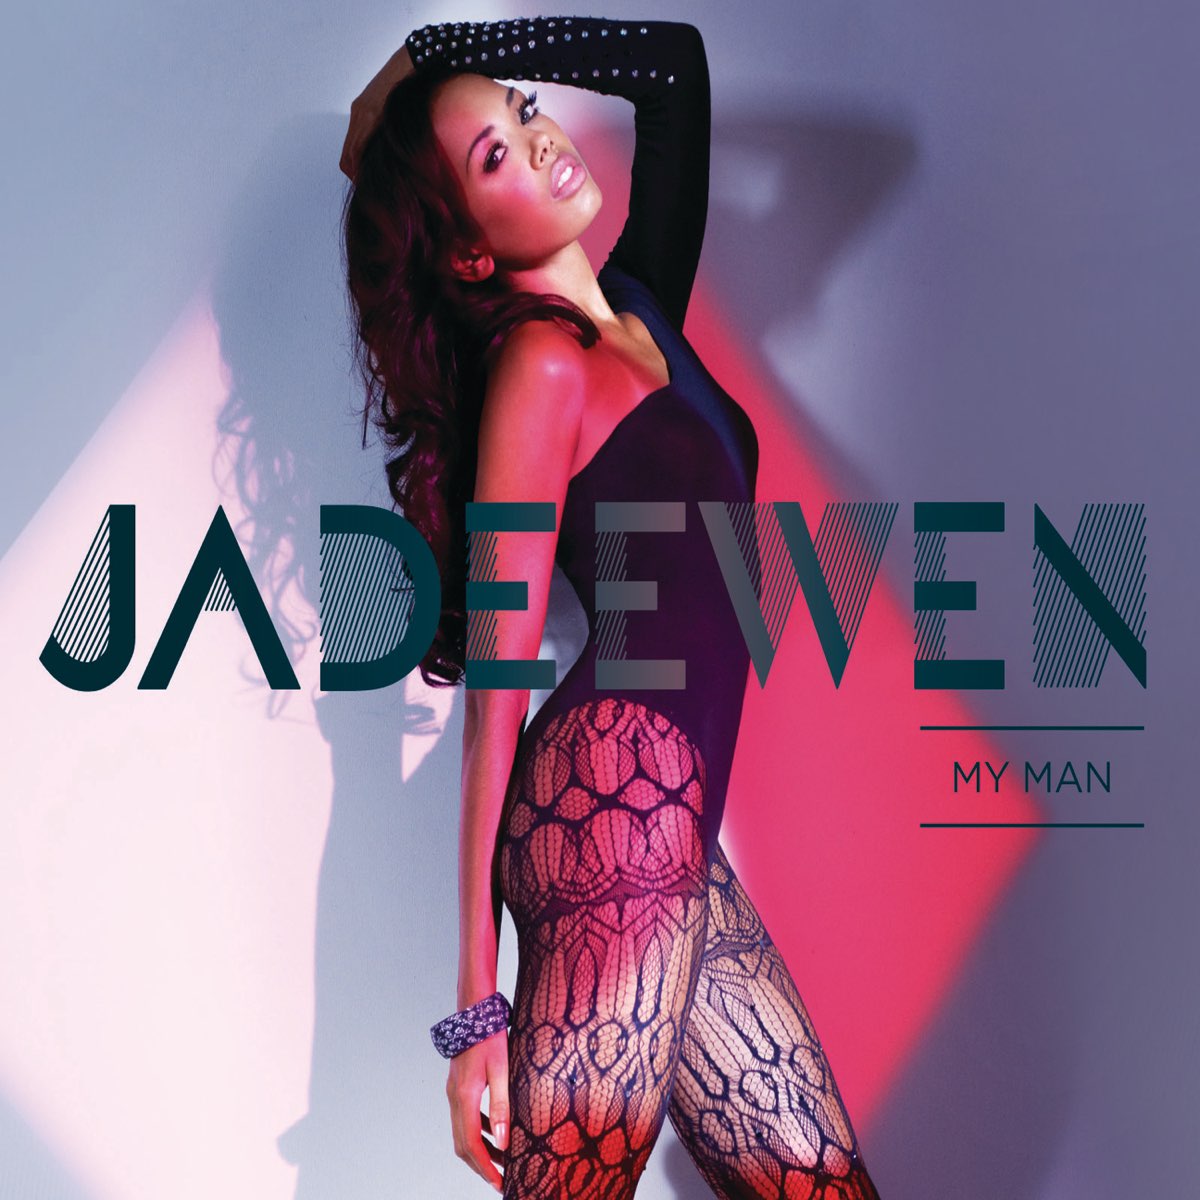 Jade Ewen — My Man cover artwork